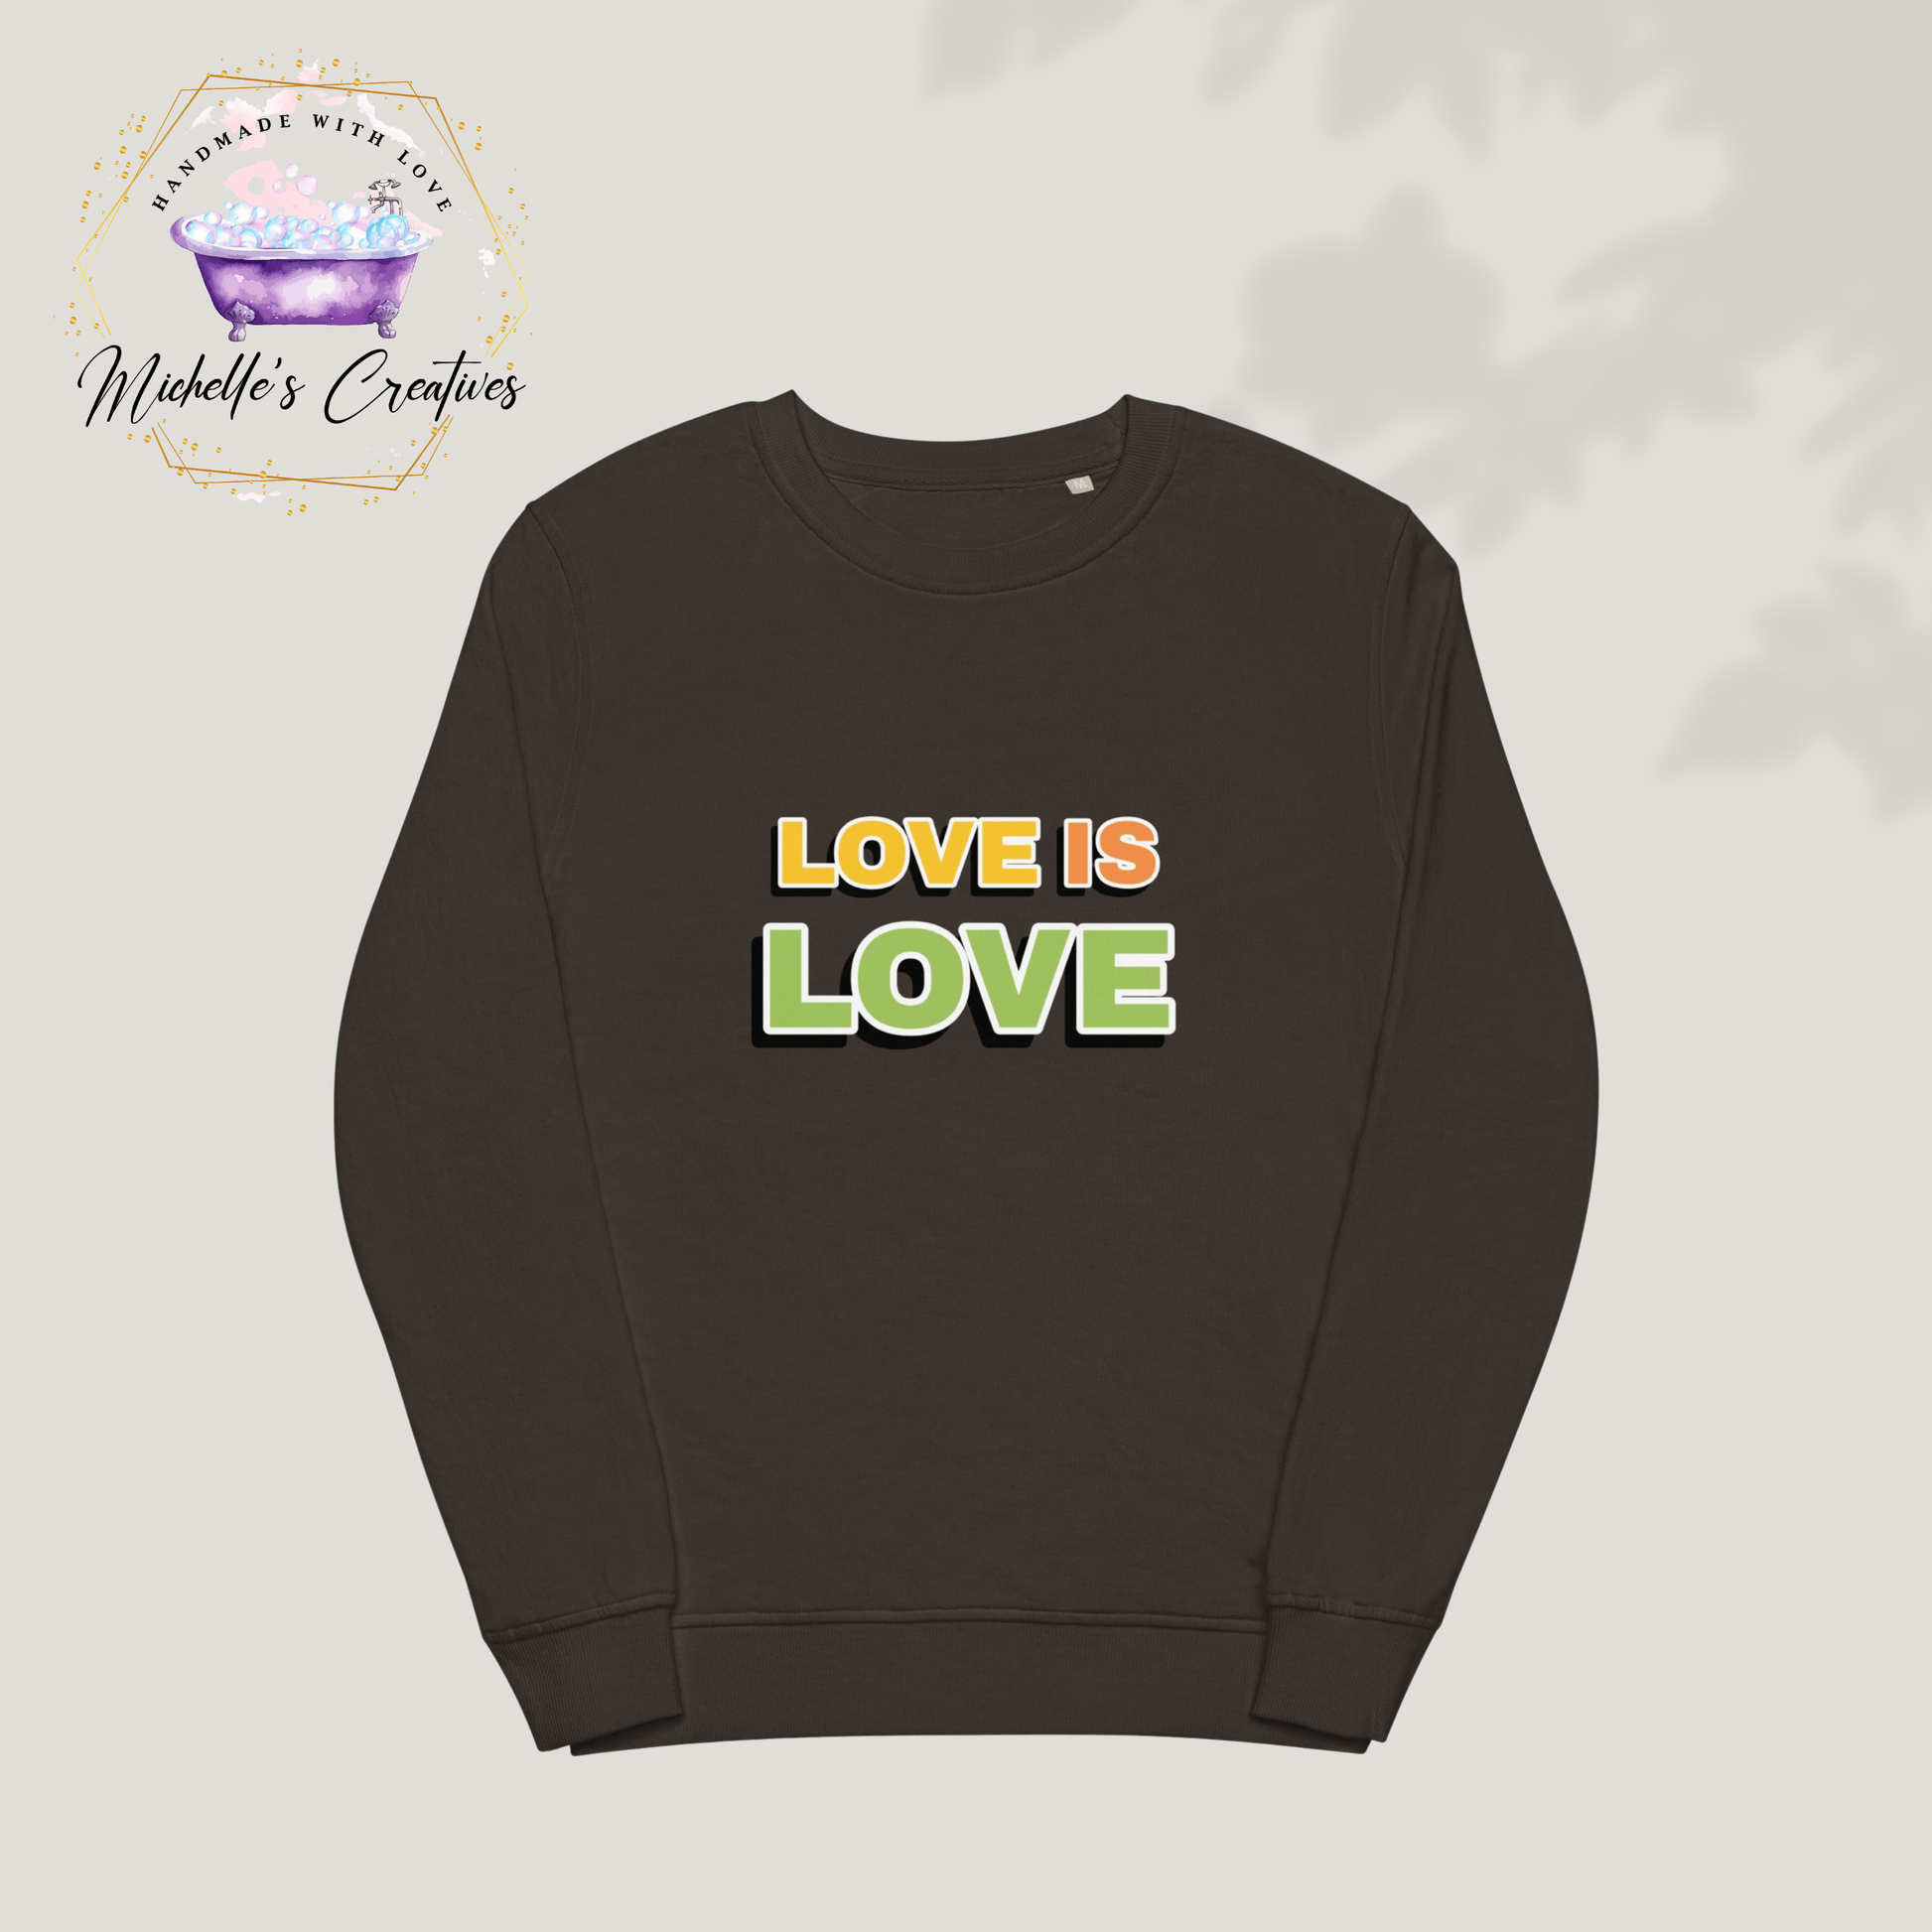 Michelle's Creatives Unisex organic "Love is Love" sweatshirt | Shirt